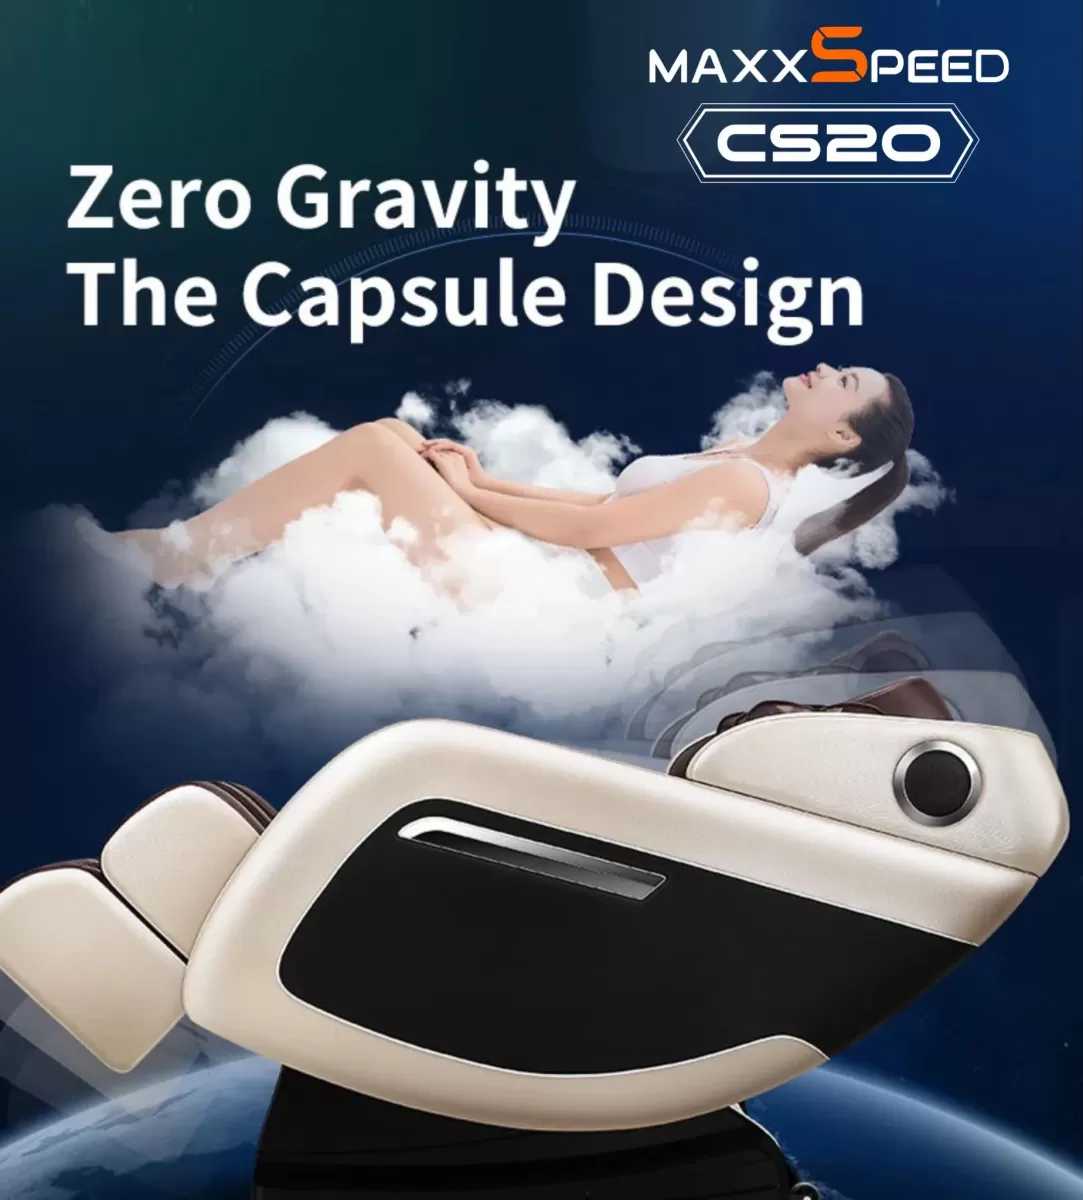 Chế độ Zero Gravity của Ghế Massage Azaki Maxxspeed CS20 - Đen chính hãng